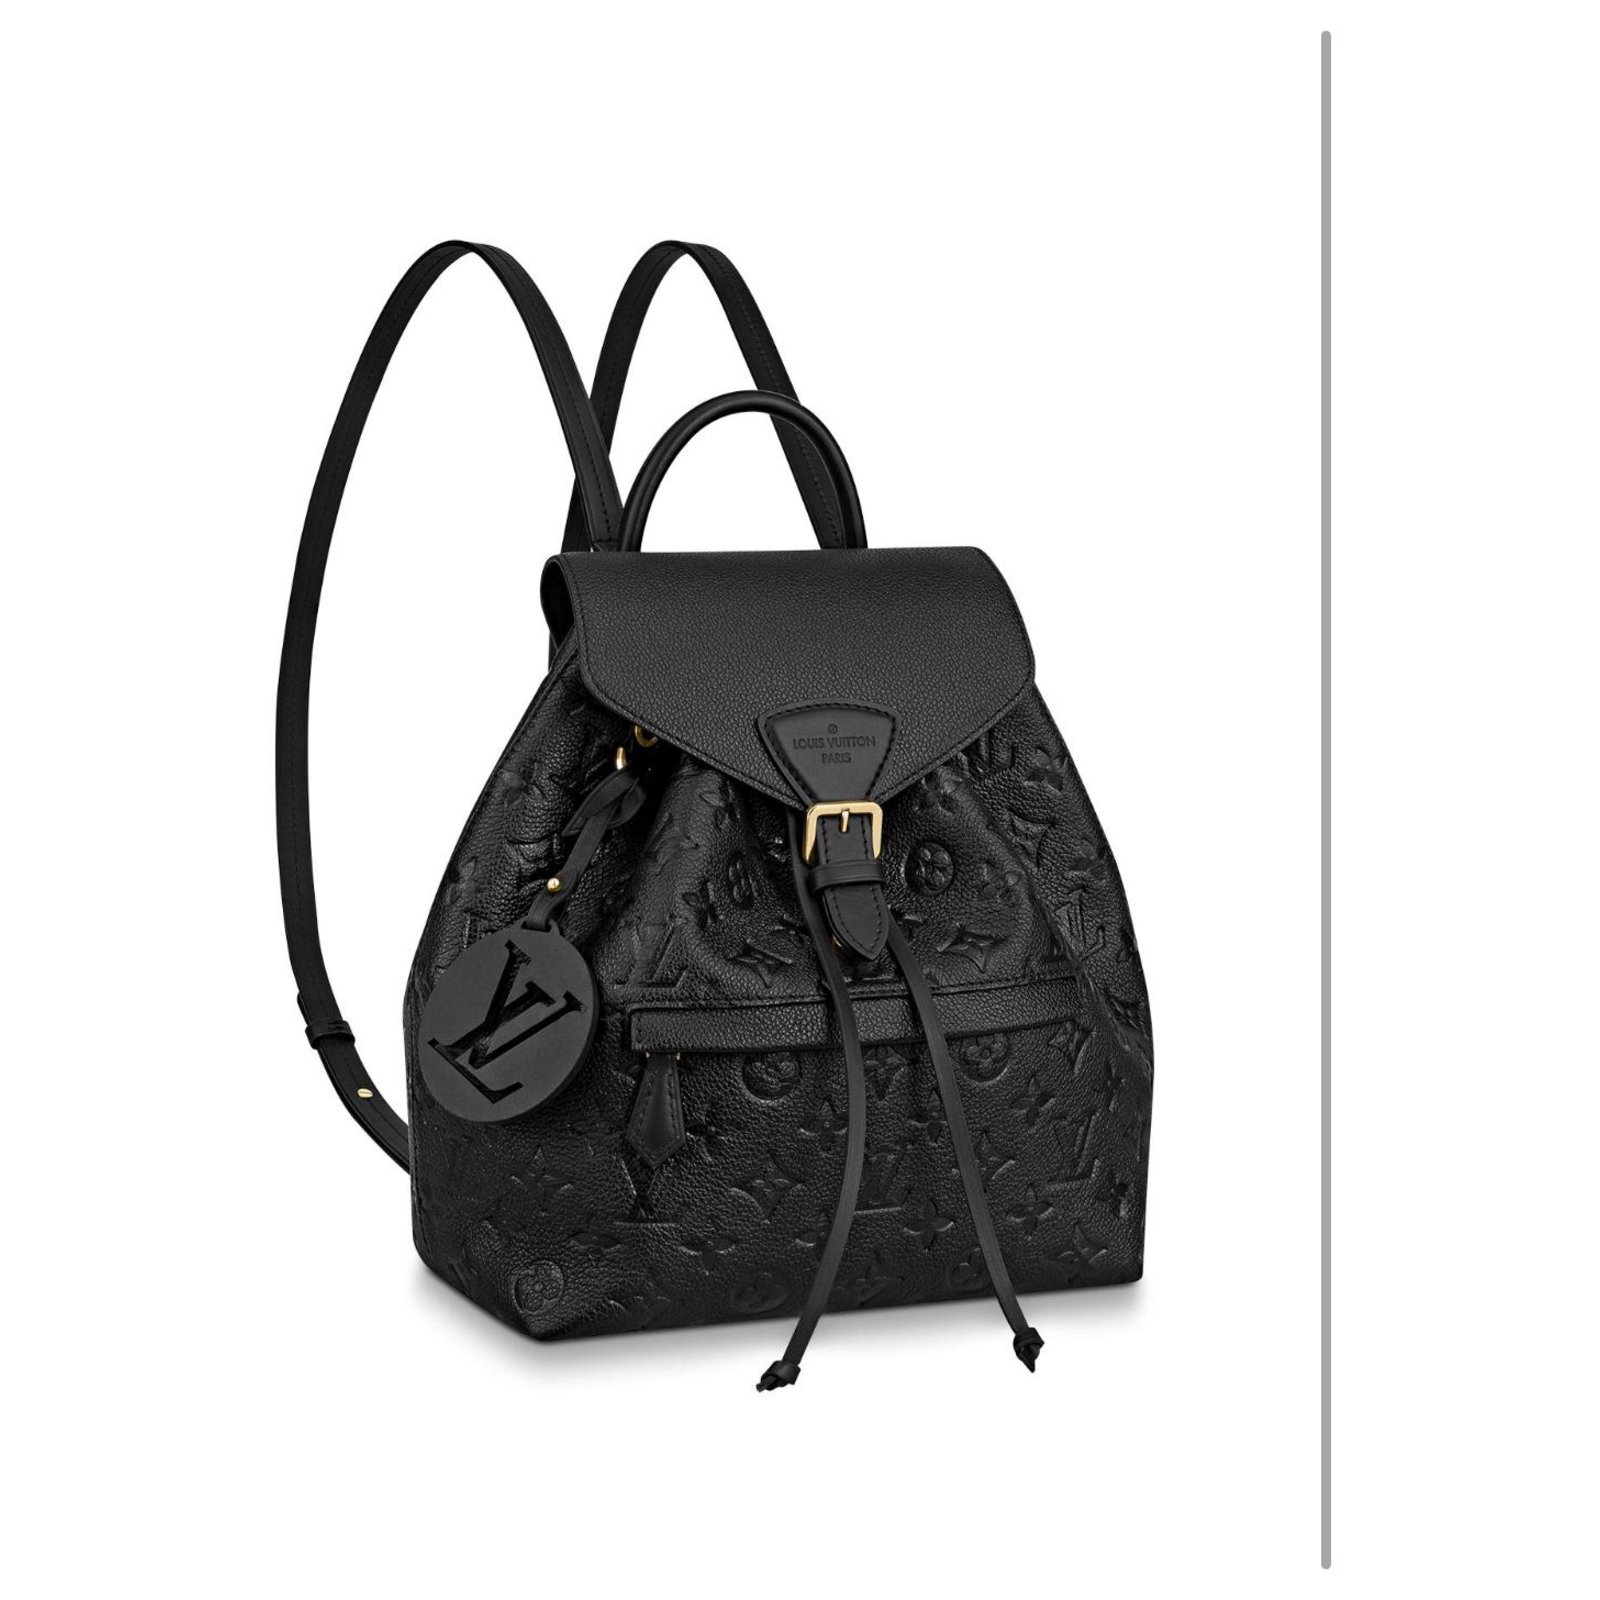 La mochila negra a cuadros de Louis Vuitton usada por Cédric